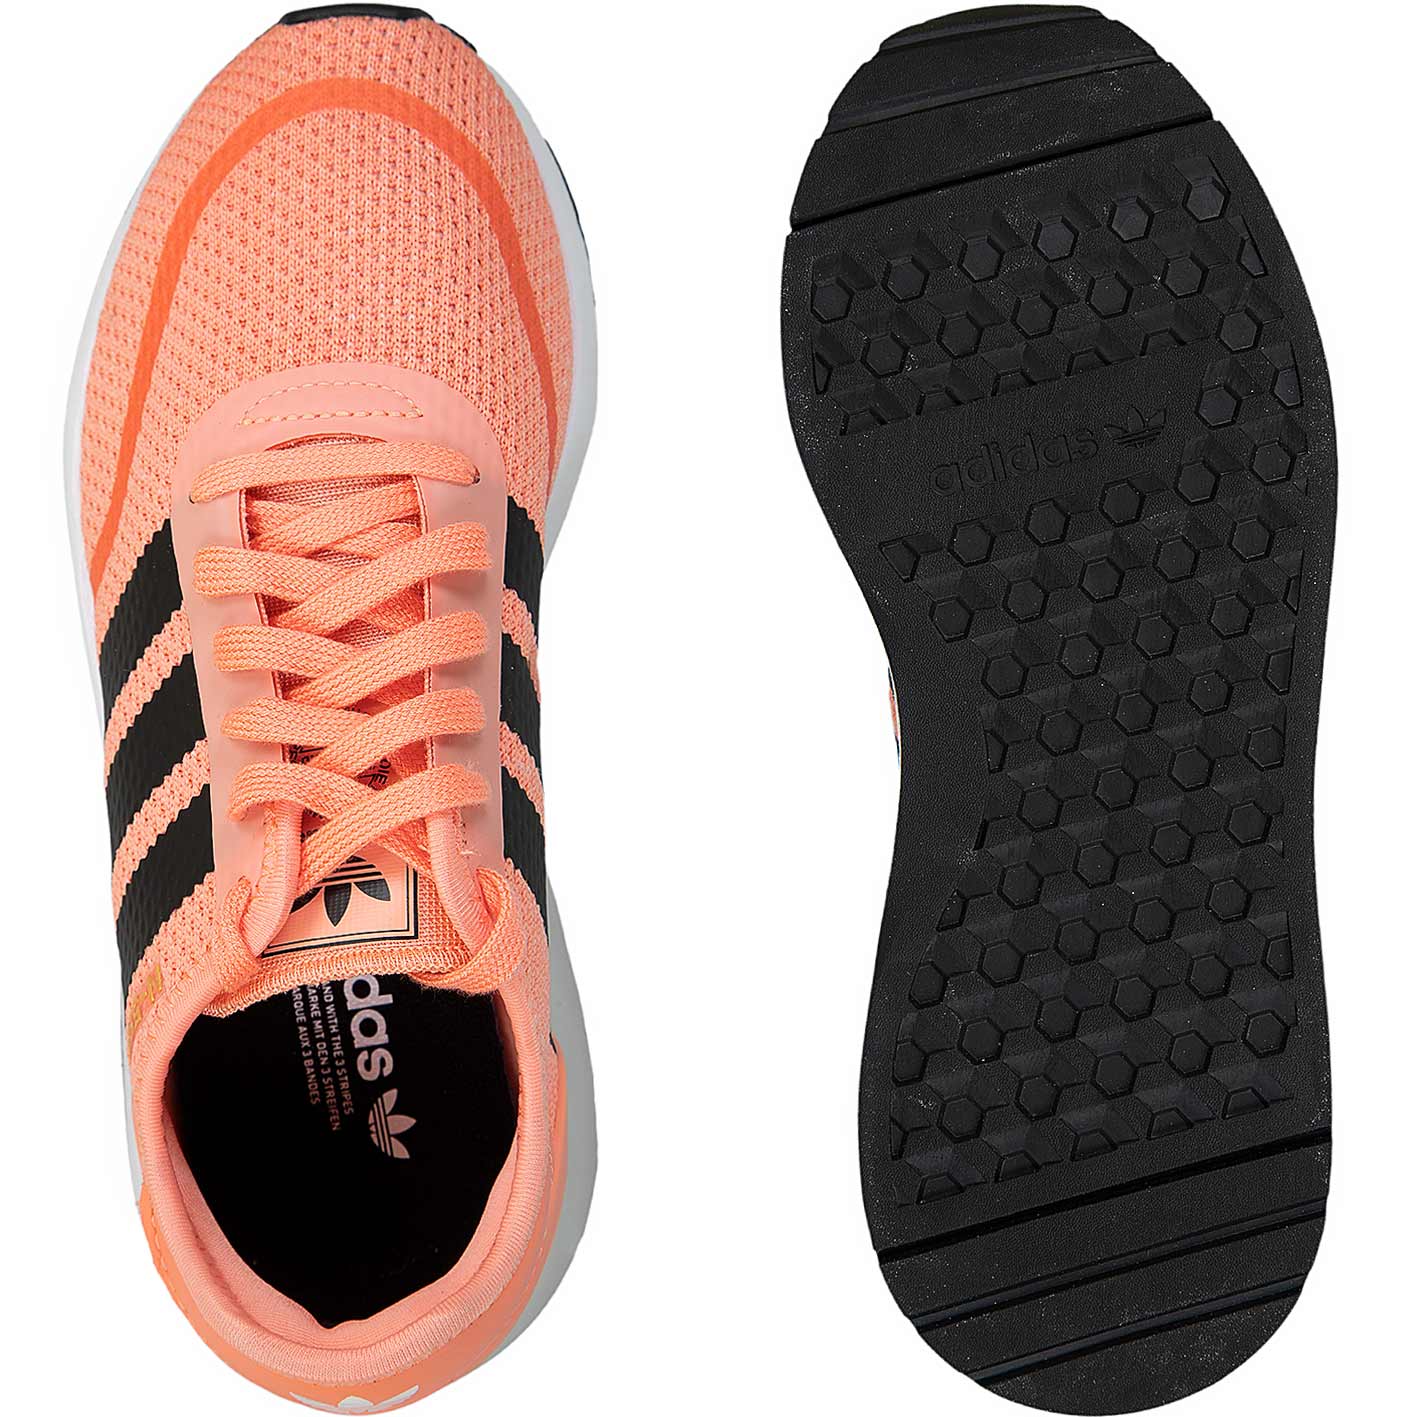 ☆ Adidas Originals Damen Sneaker N-5923 orange/schwarz - hier bestellen!